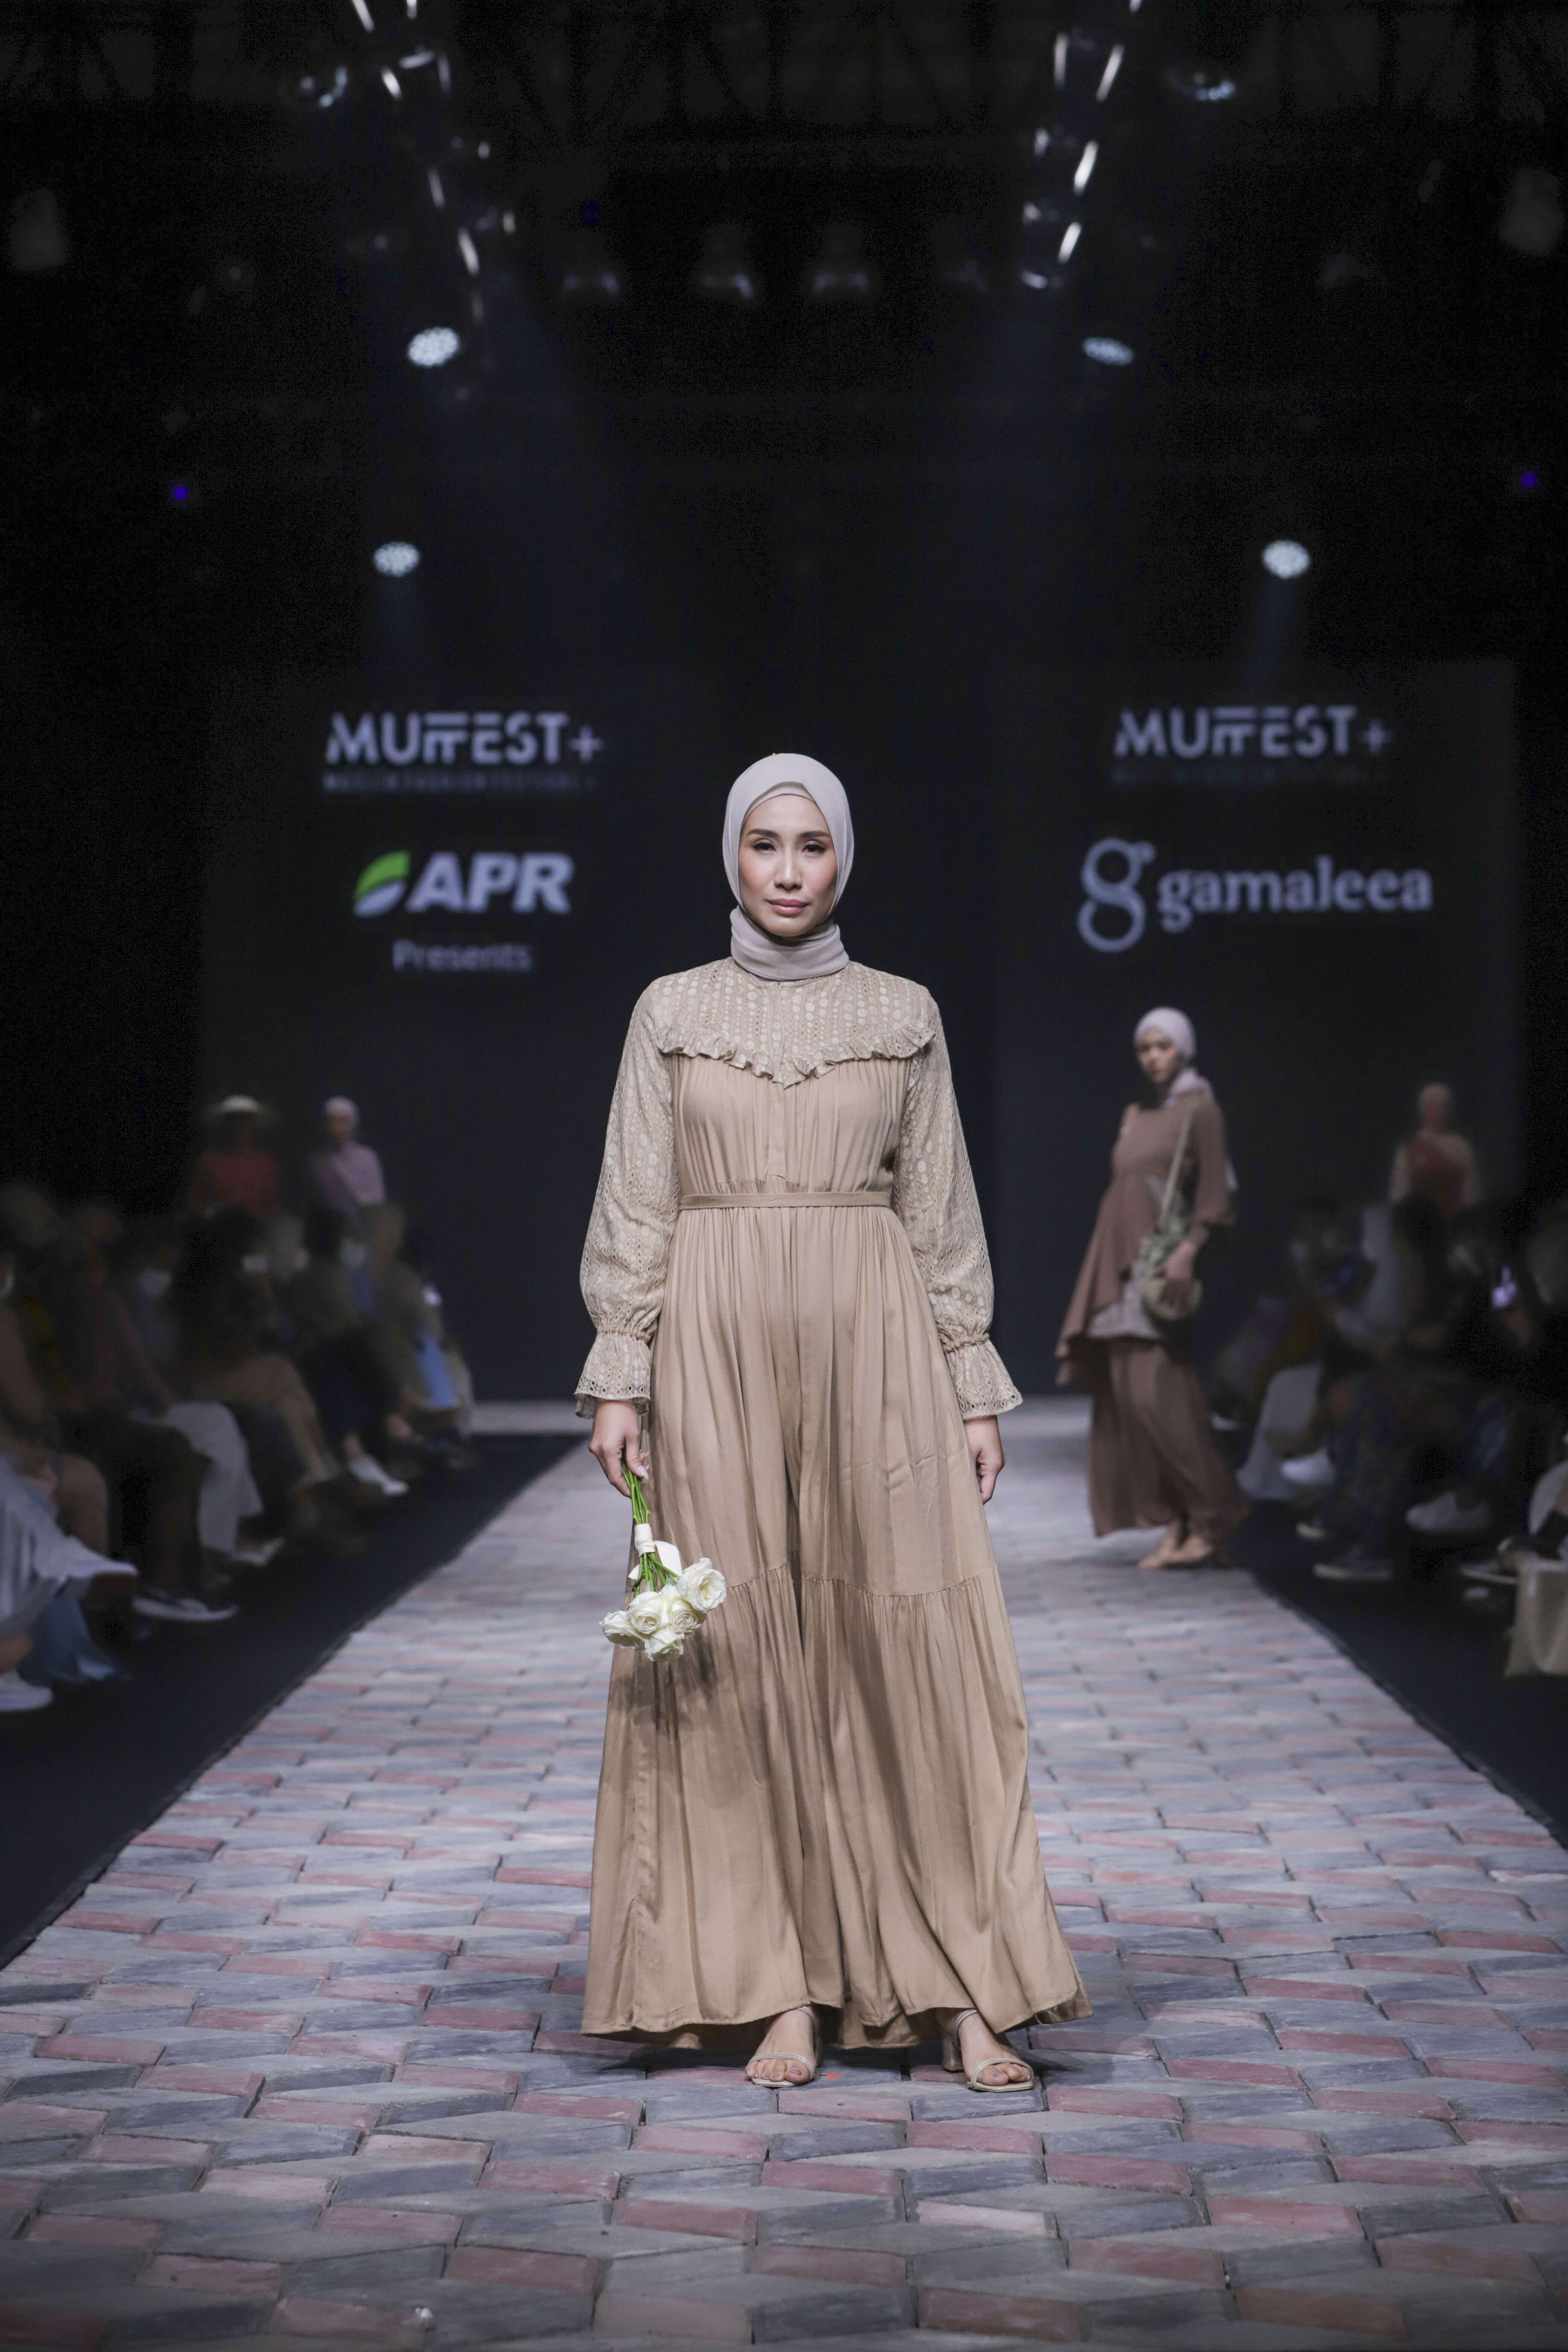 Model rok maxi dari Gamaleea dalam Sustainable Modest Fashion, Muslim Fashion Festival (MUFFEST+) 2022, Kamis (21/04/2022). (Sumber: MUFFEST+ 2022)